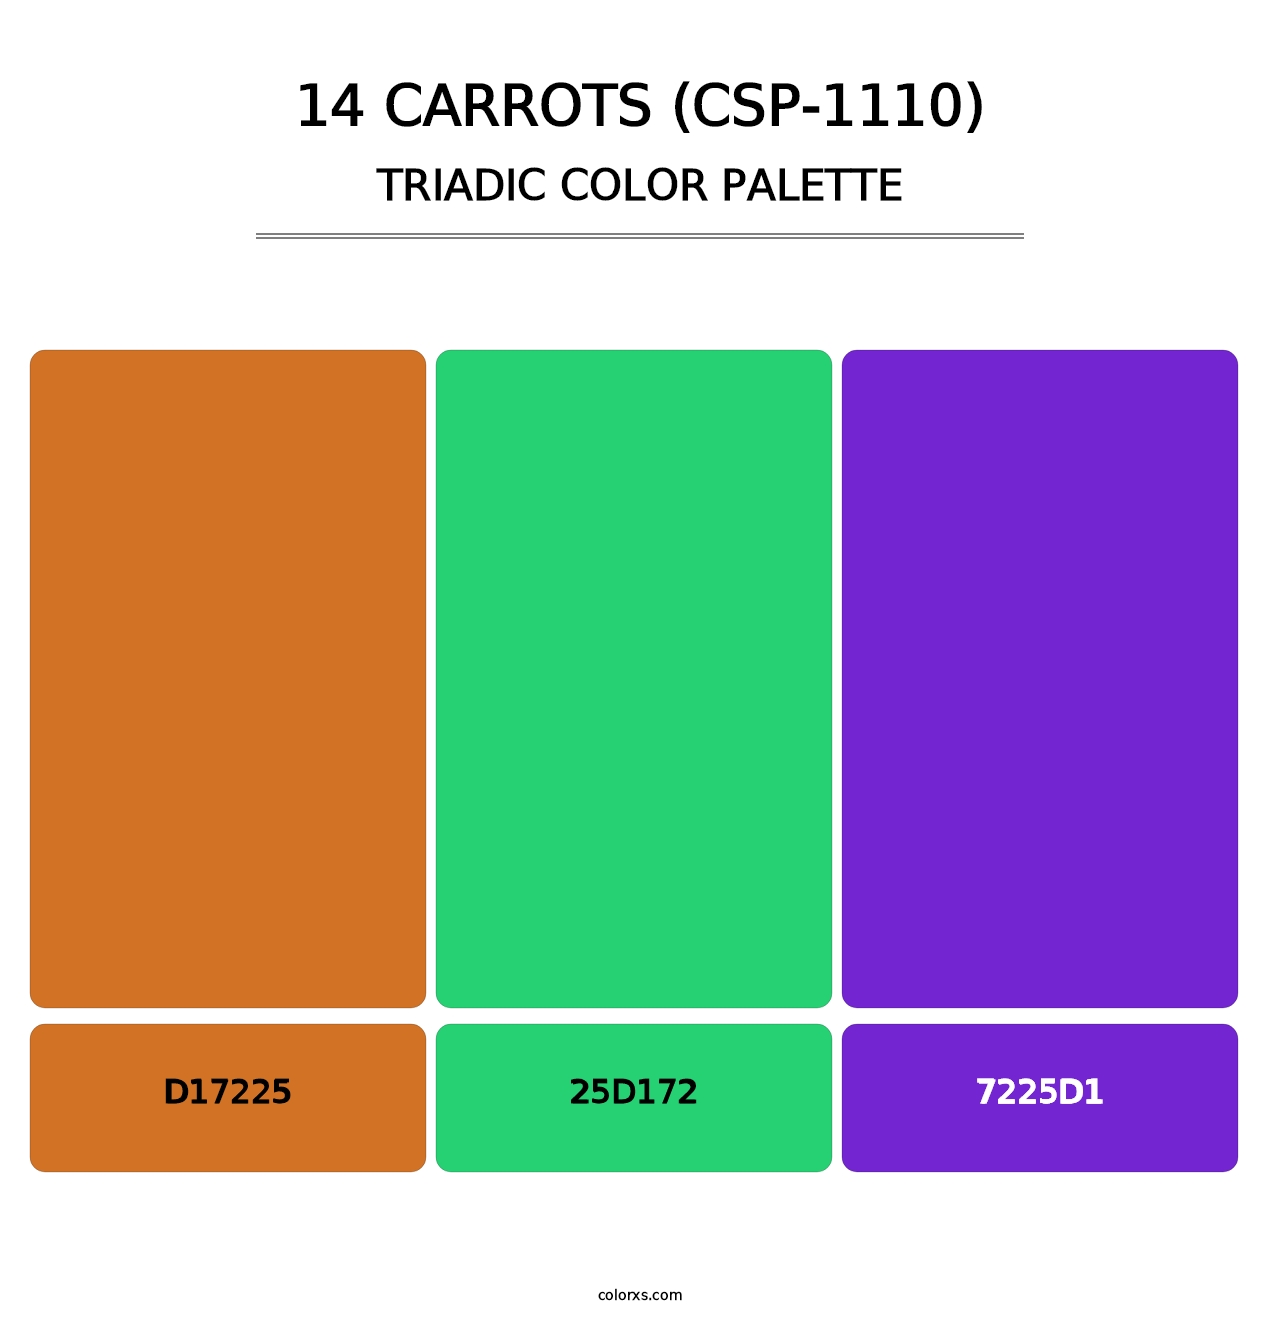 14 Carrots (CSP-1110) - Triadic Color Palette